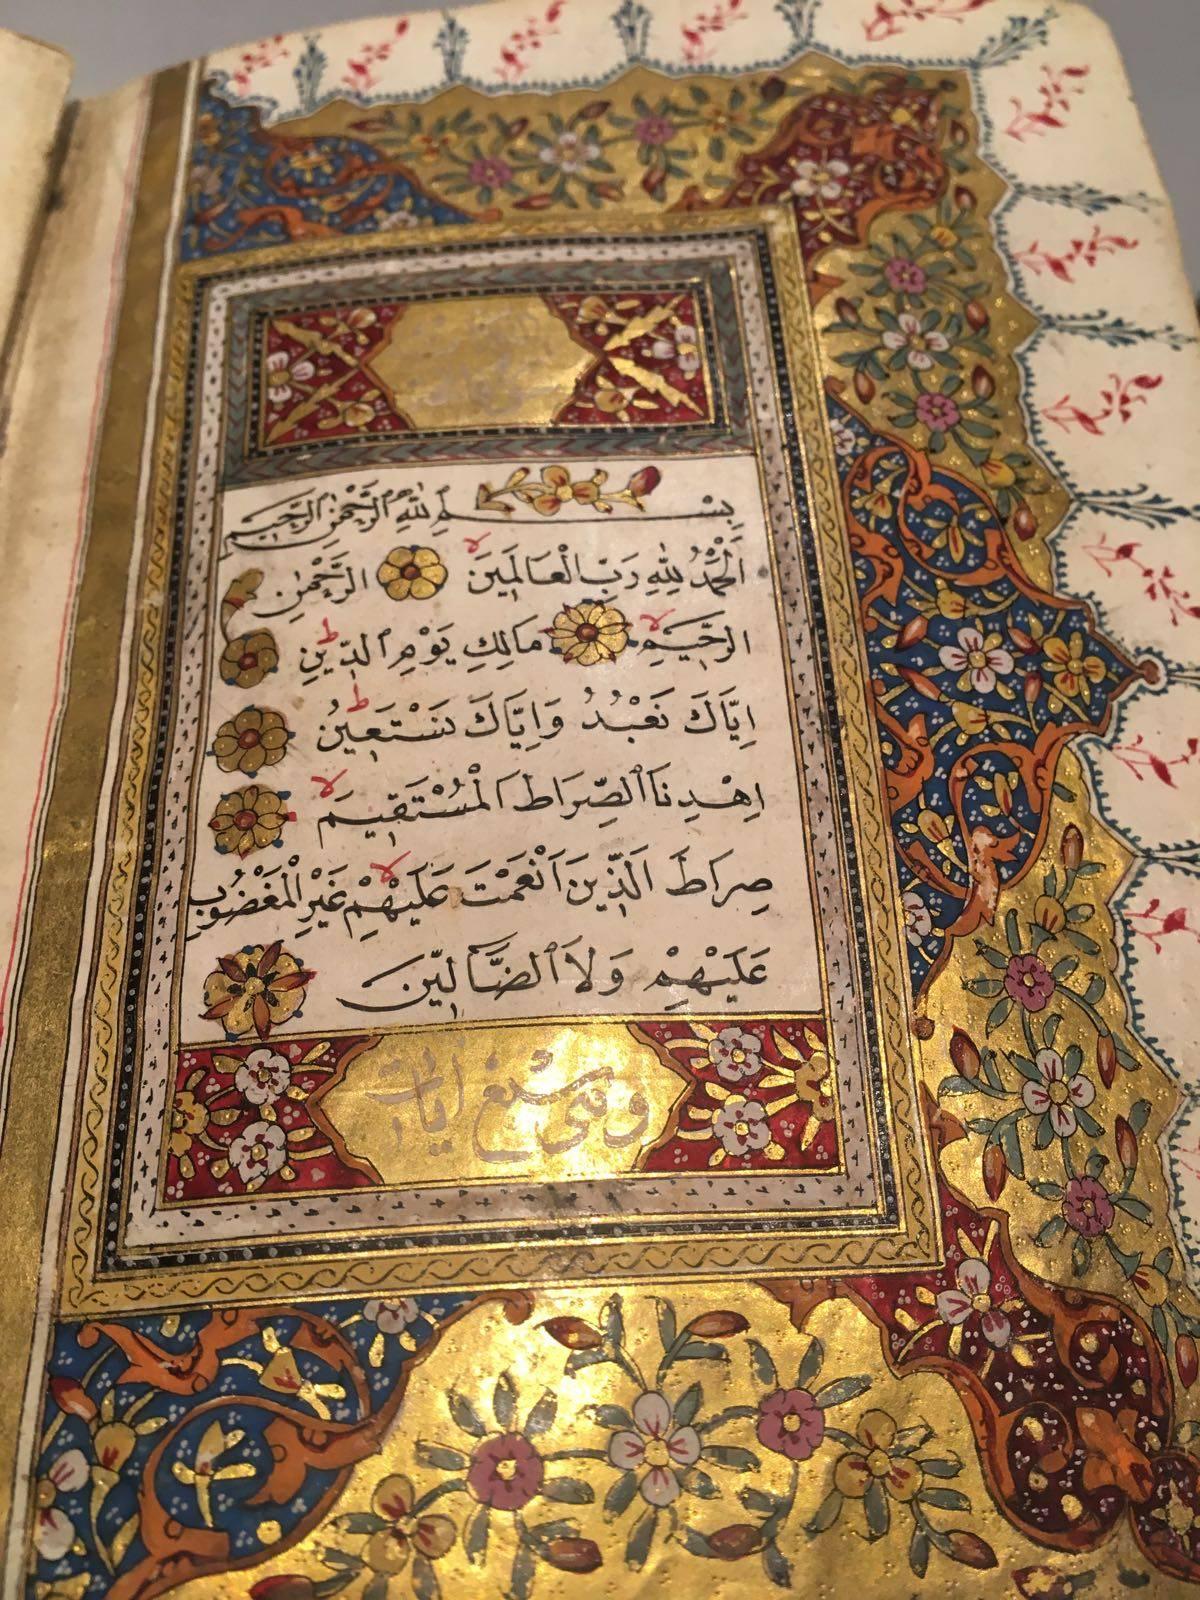 Enameled Beautiful Turkish Quran Signed and Dated 1233 Hijri